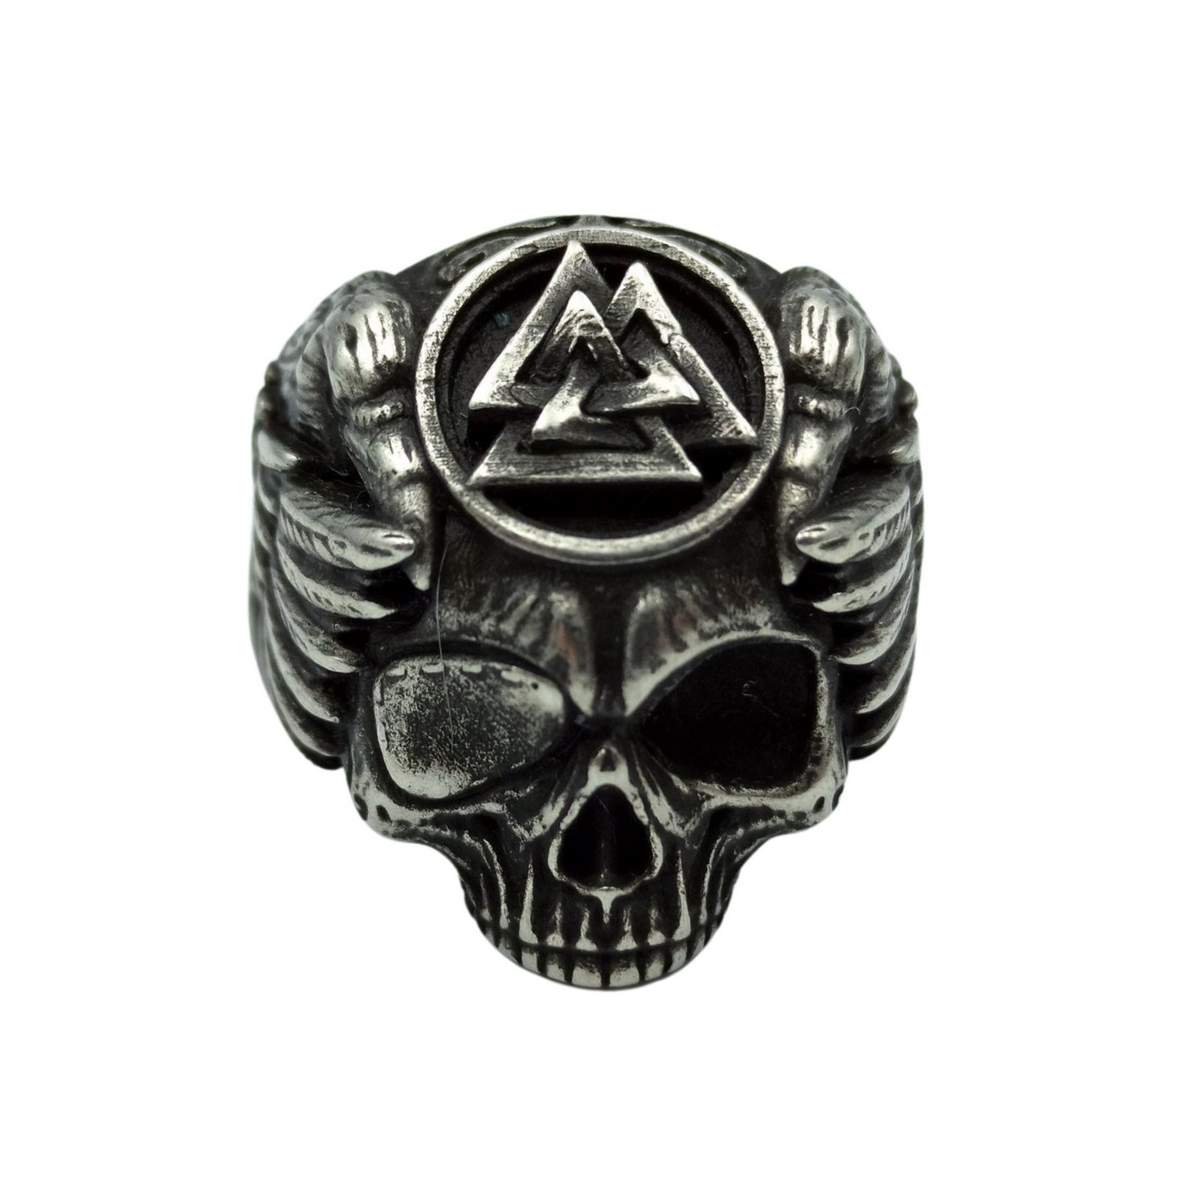 Odin skull bronze ring